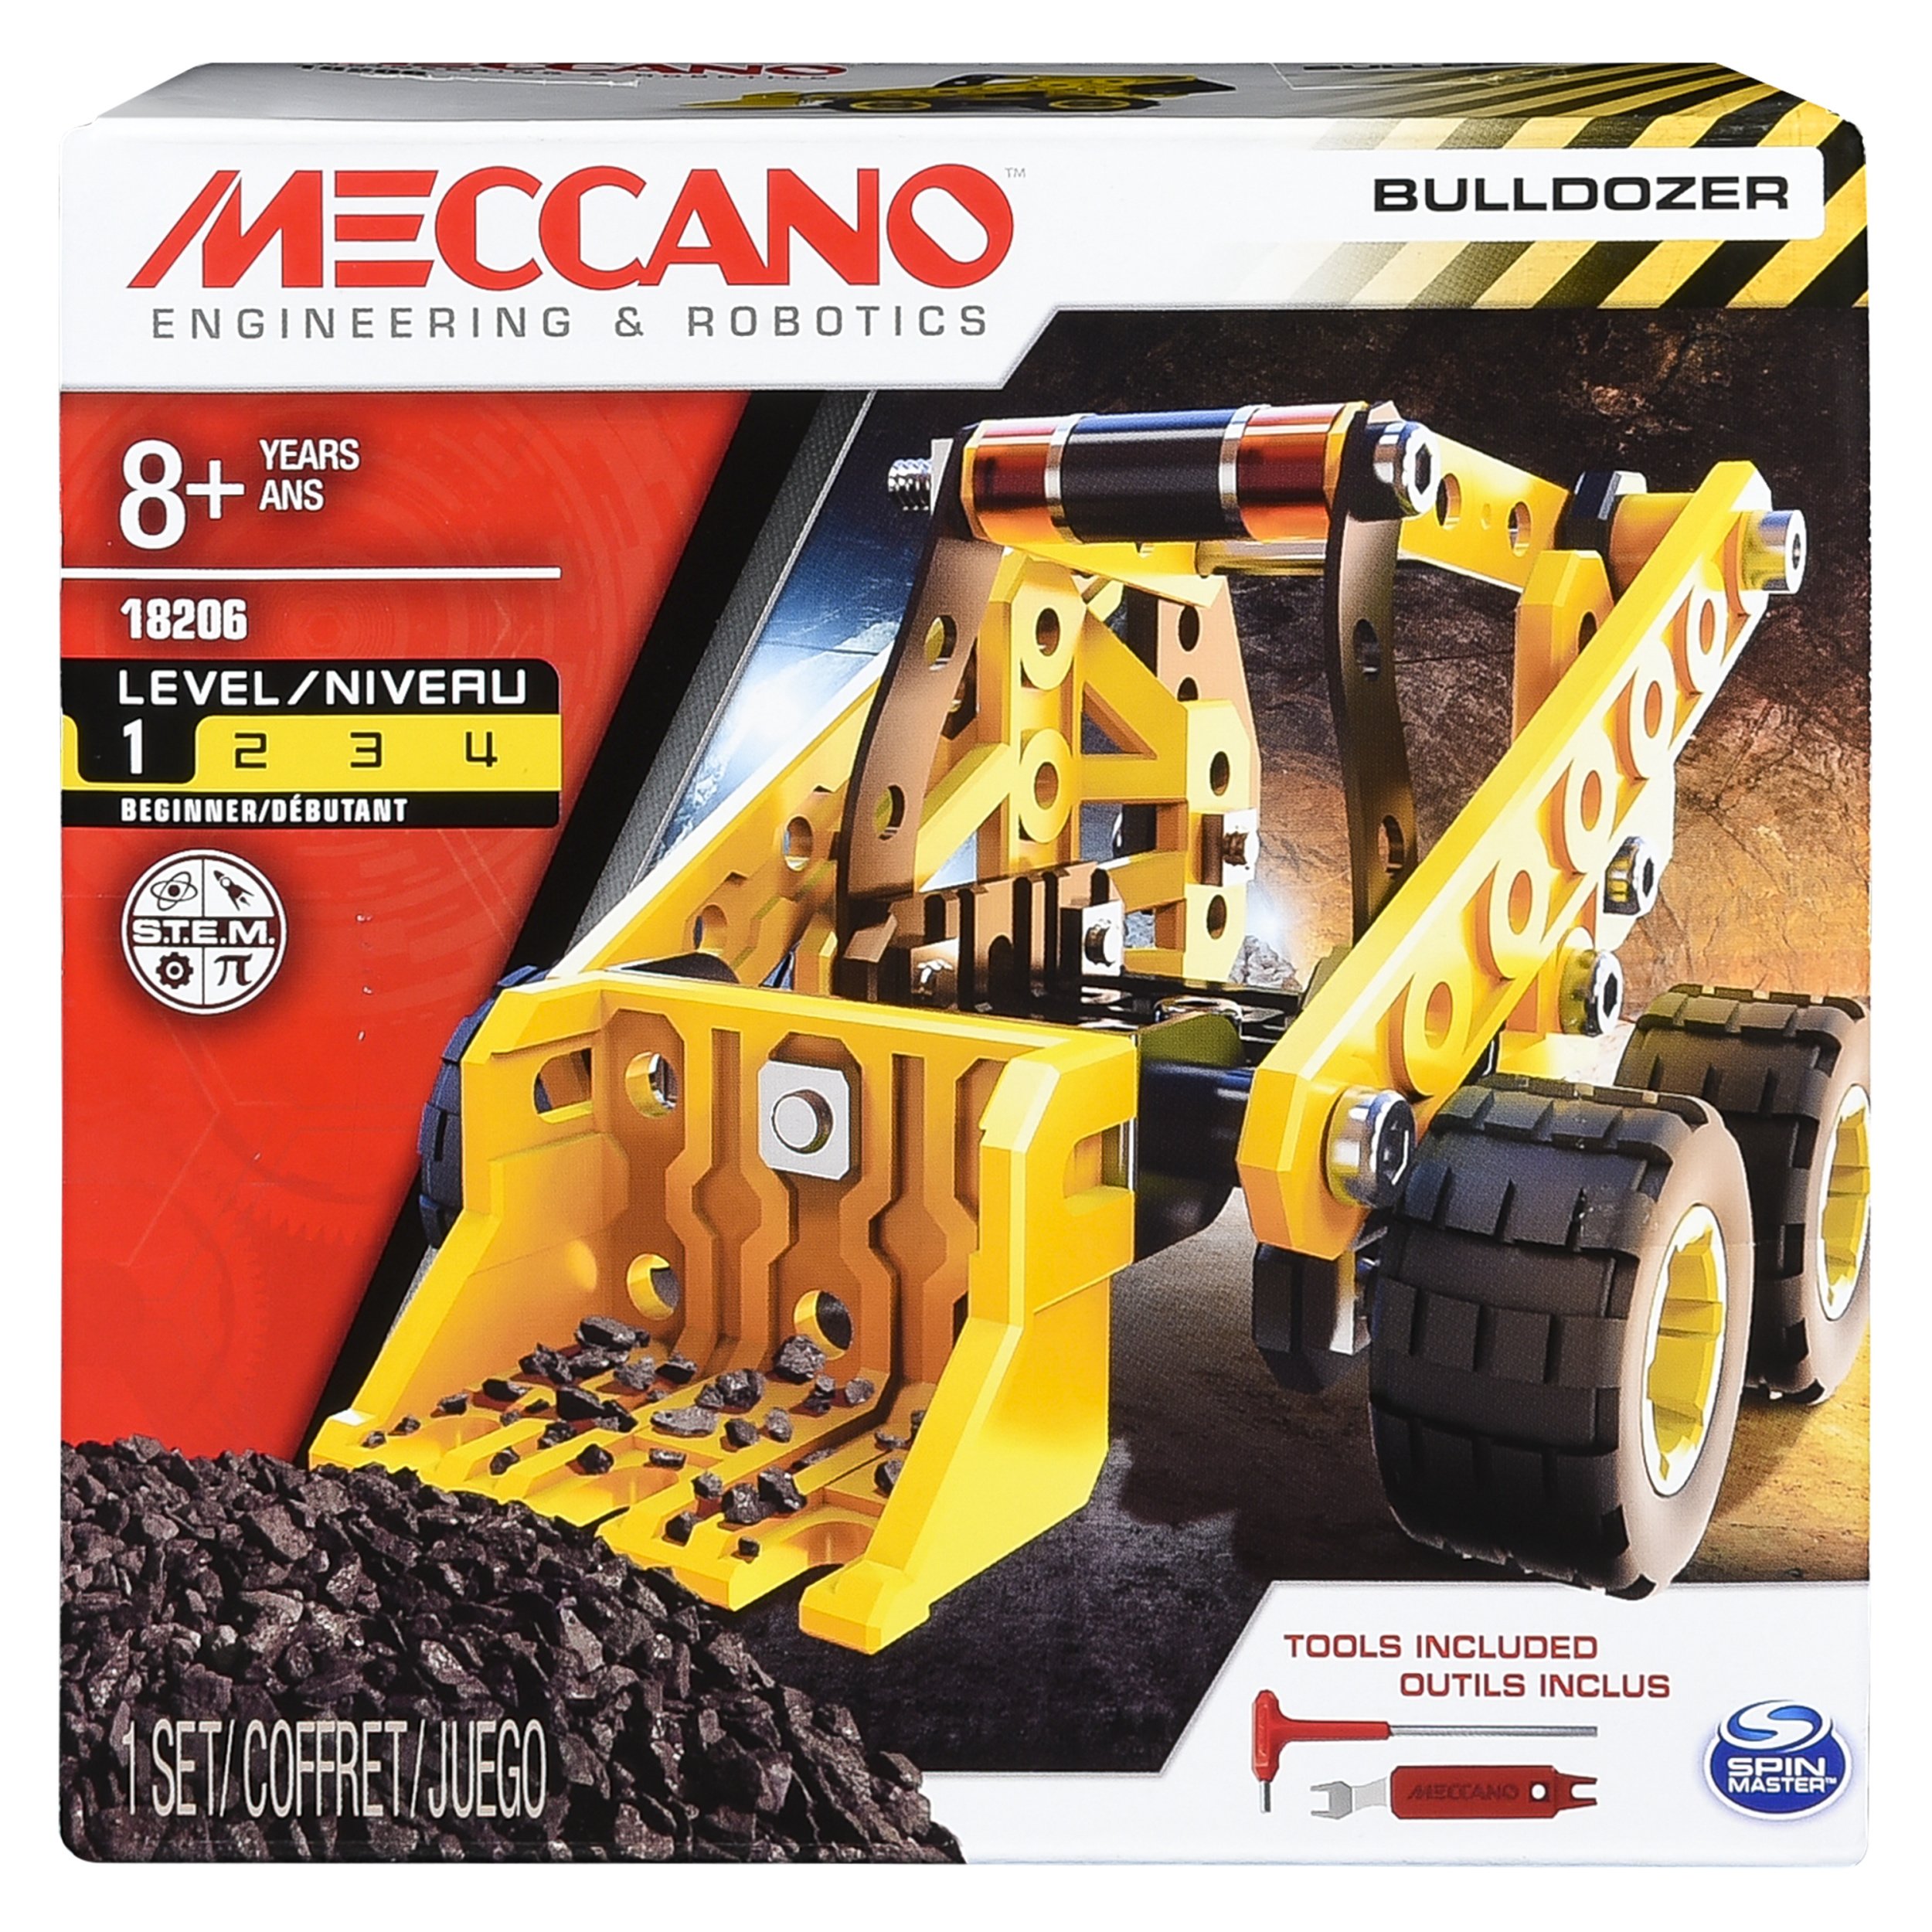 Meccano Themed Bulldozer Small